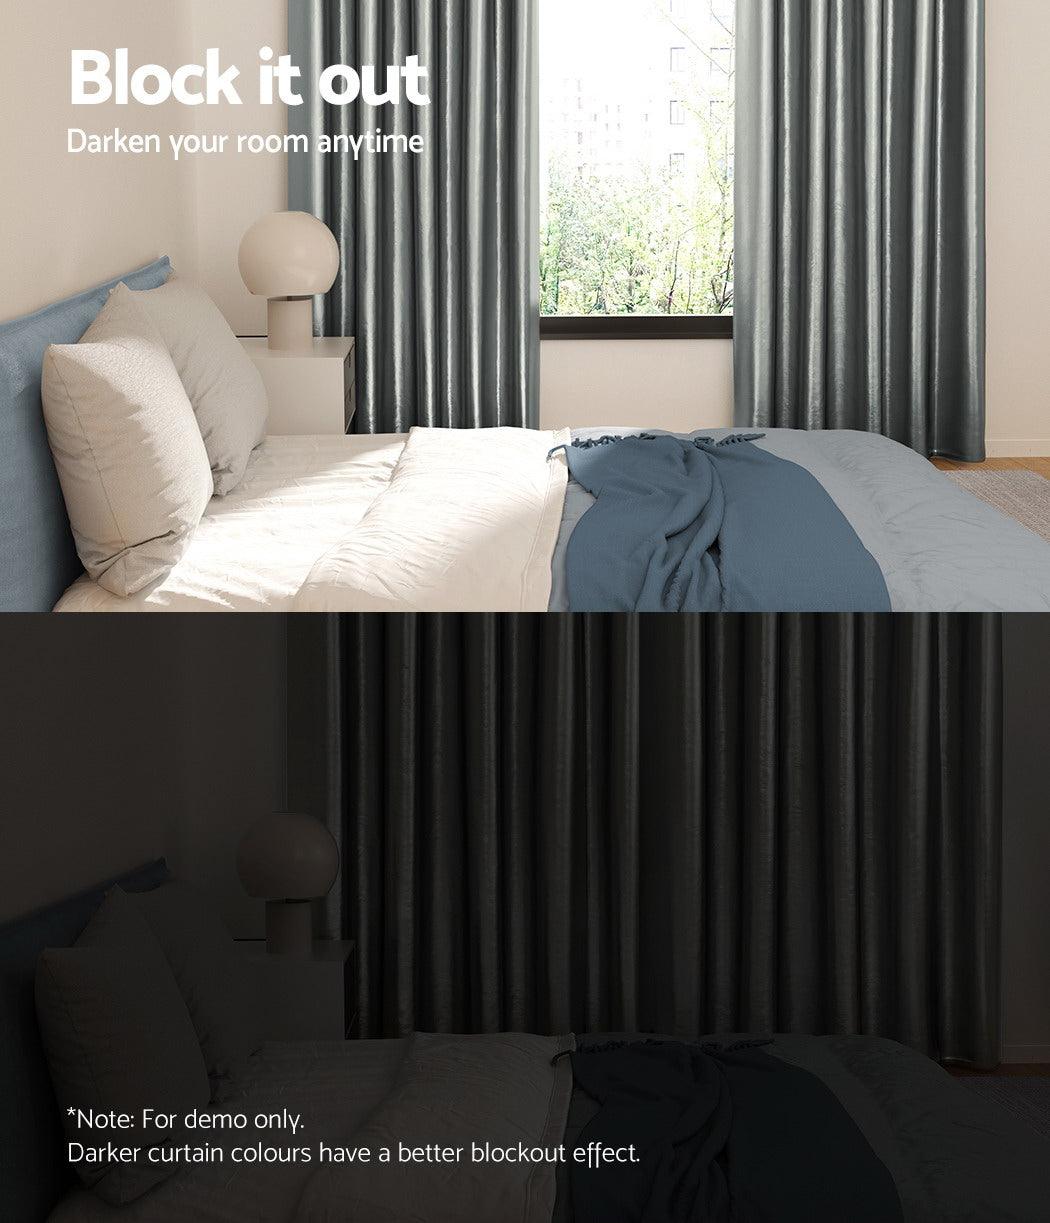 Artiss 2X Blockout Curtains Blackout Window Curtain Eyelet 140x230cm Grey